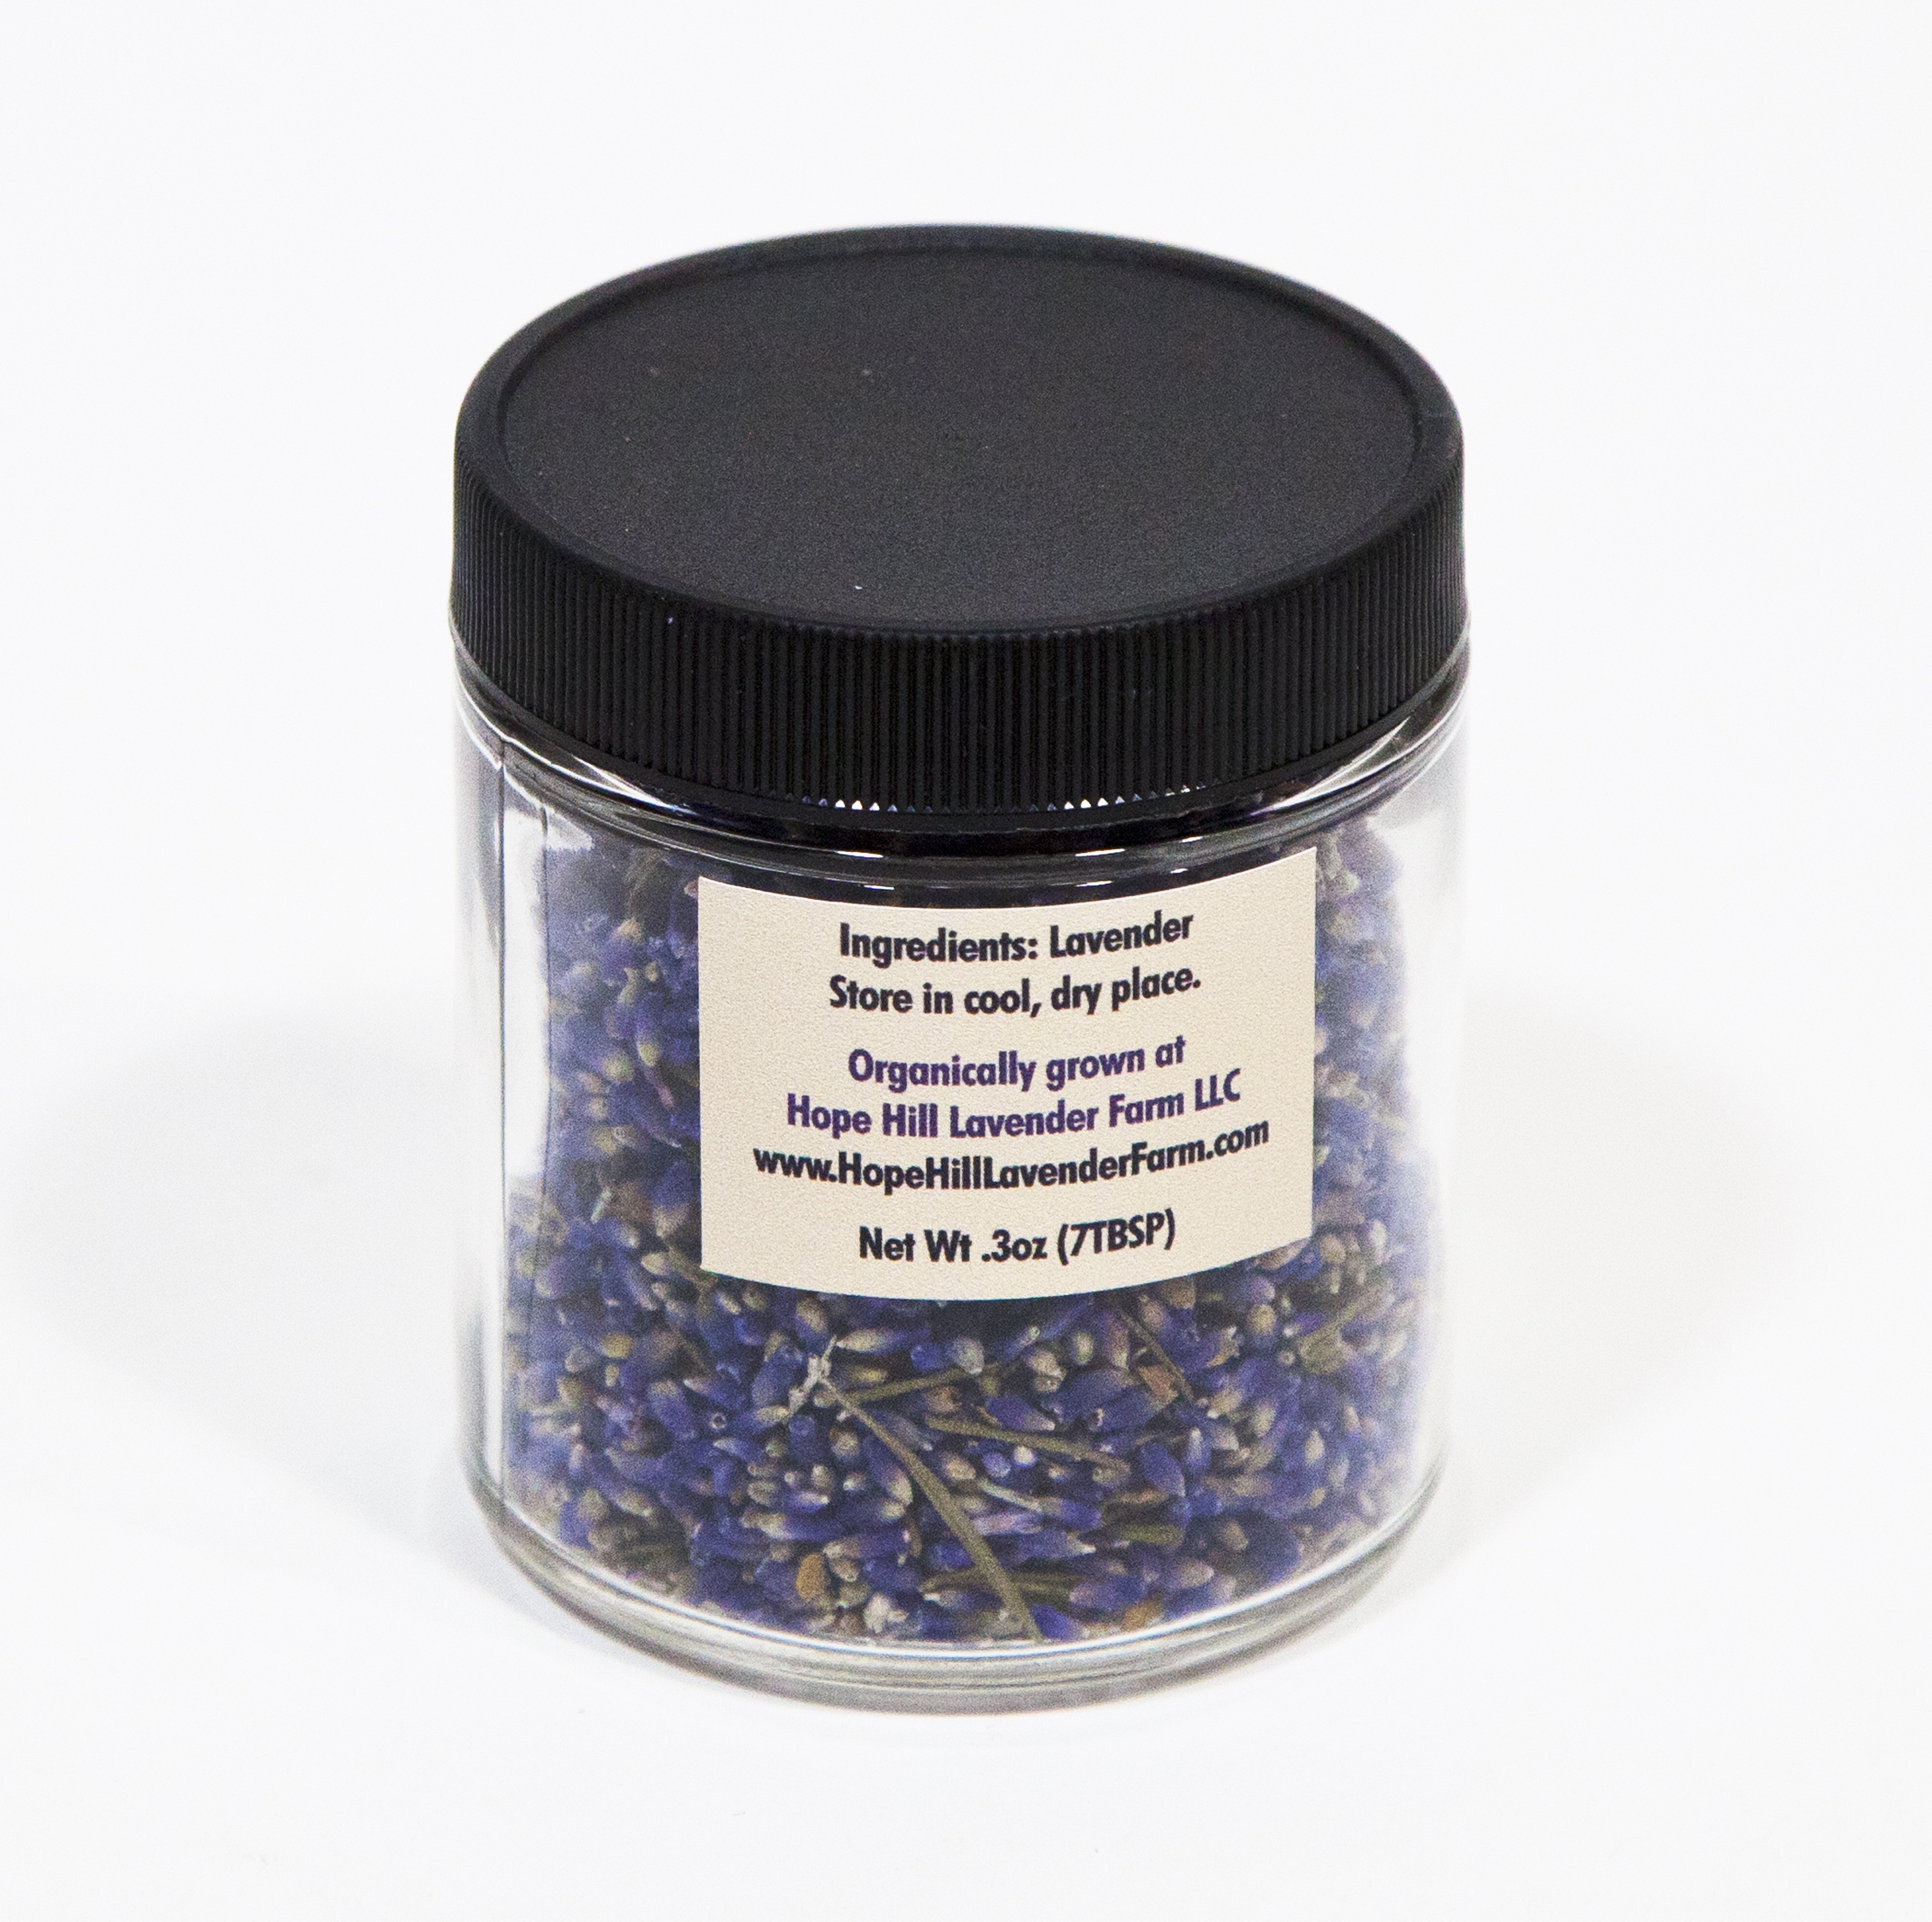 1/2 lb dried culinary lavender